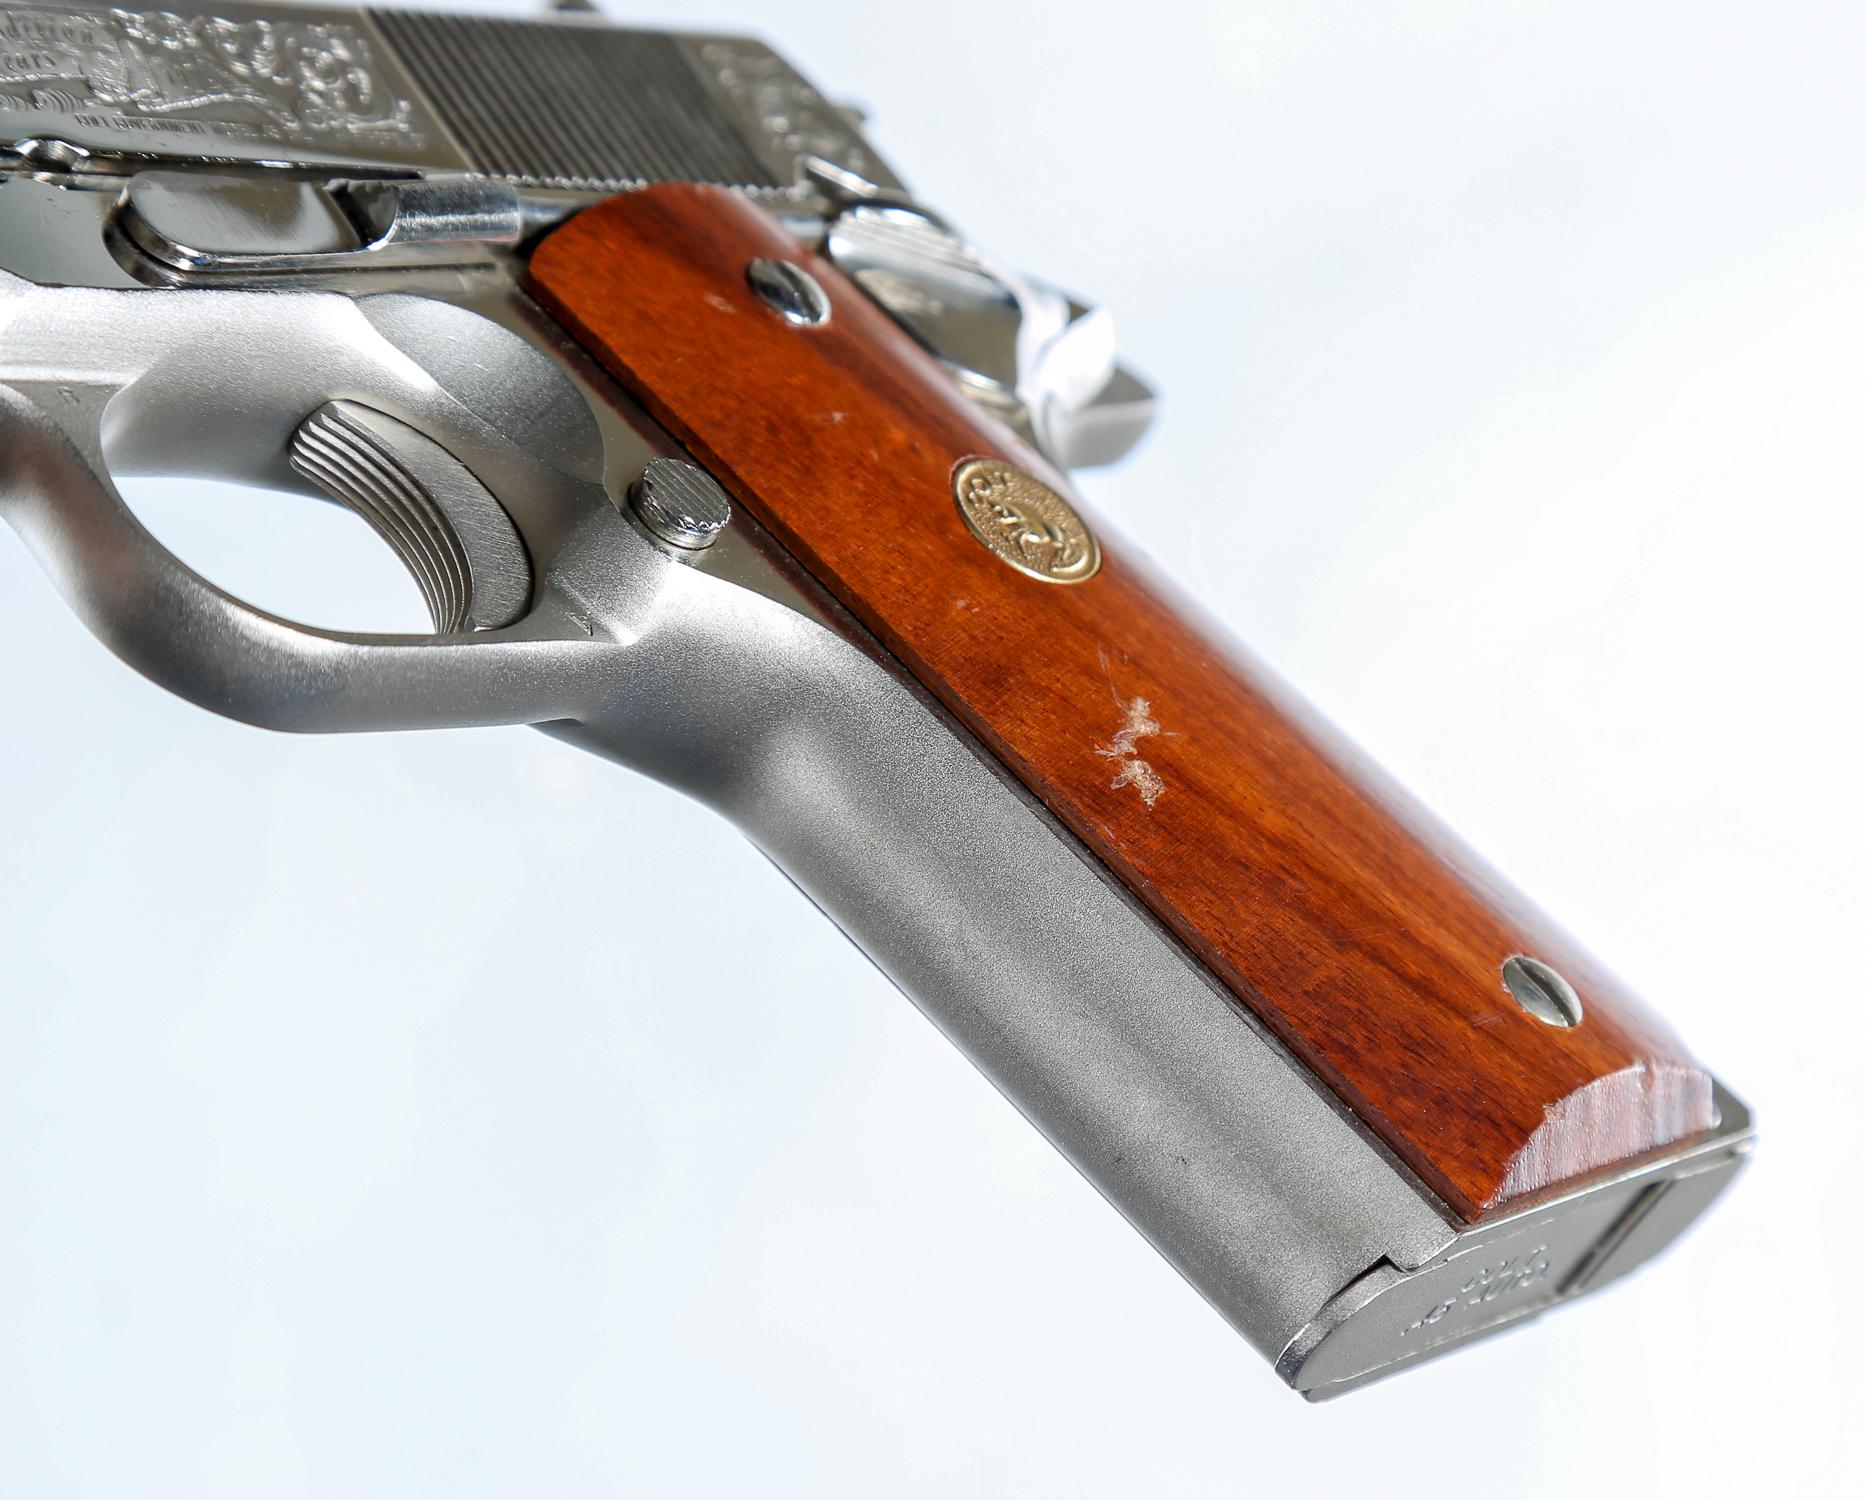 Colt Mk IV Pistol .45 ACP